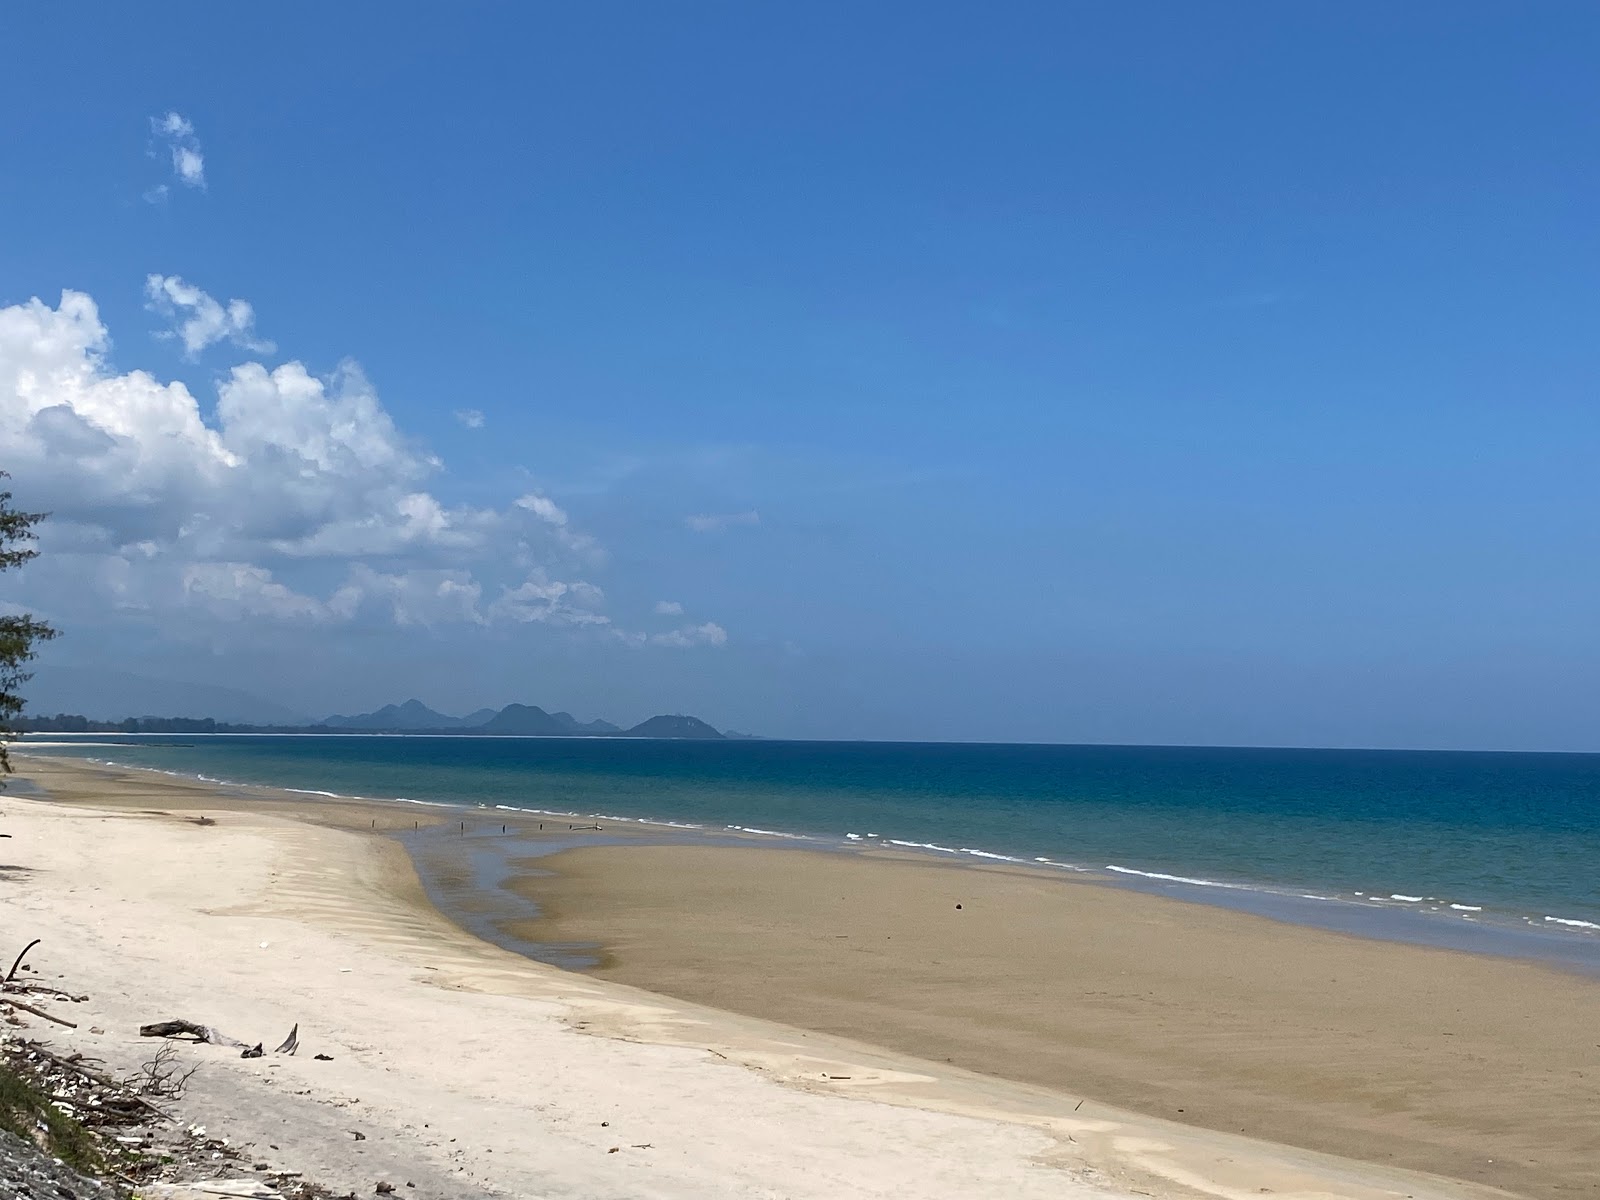 Foto de Don Samran Beach - lugar popular entre os apreciadores de relaxamento